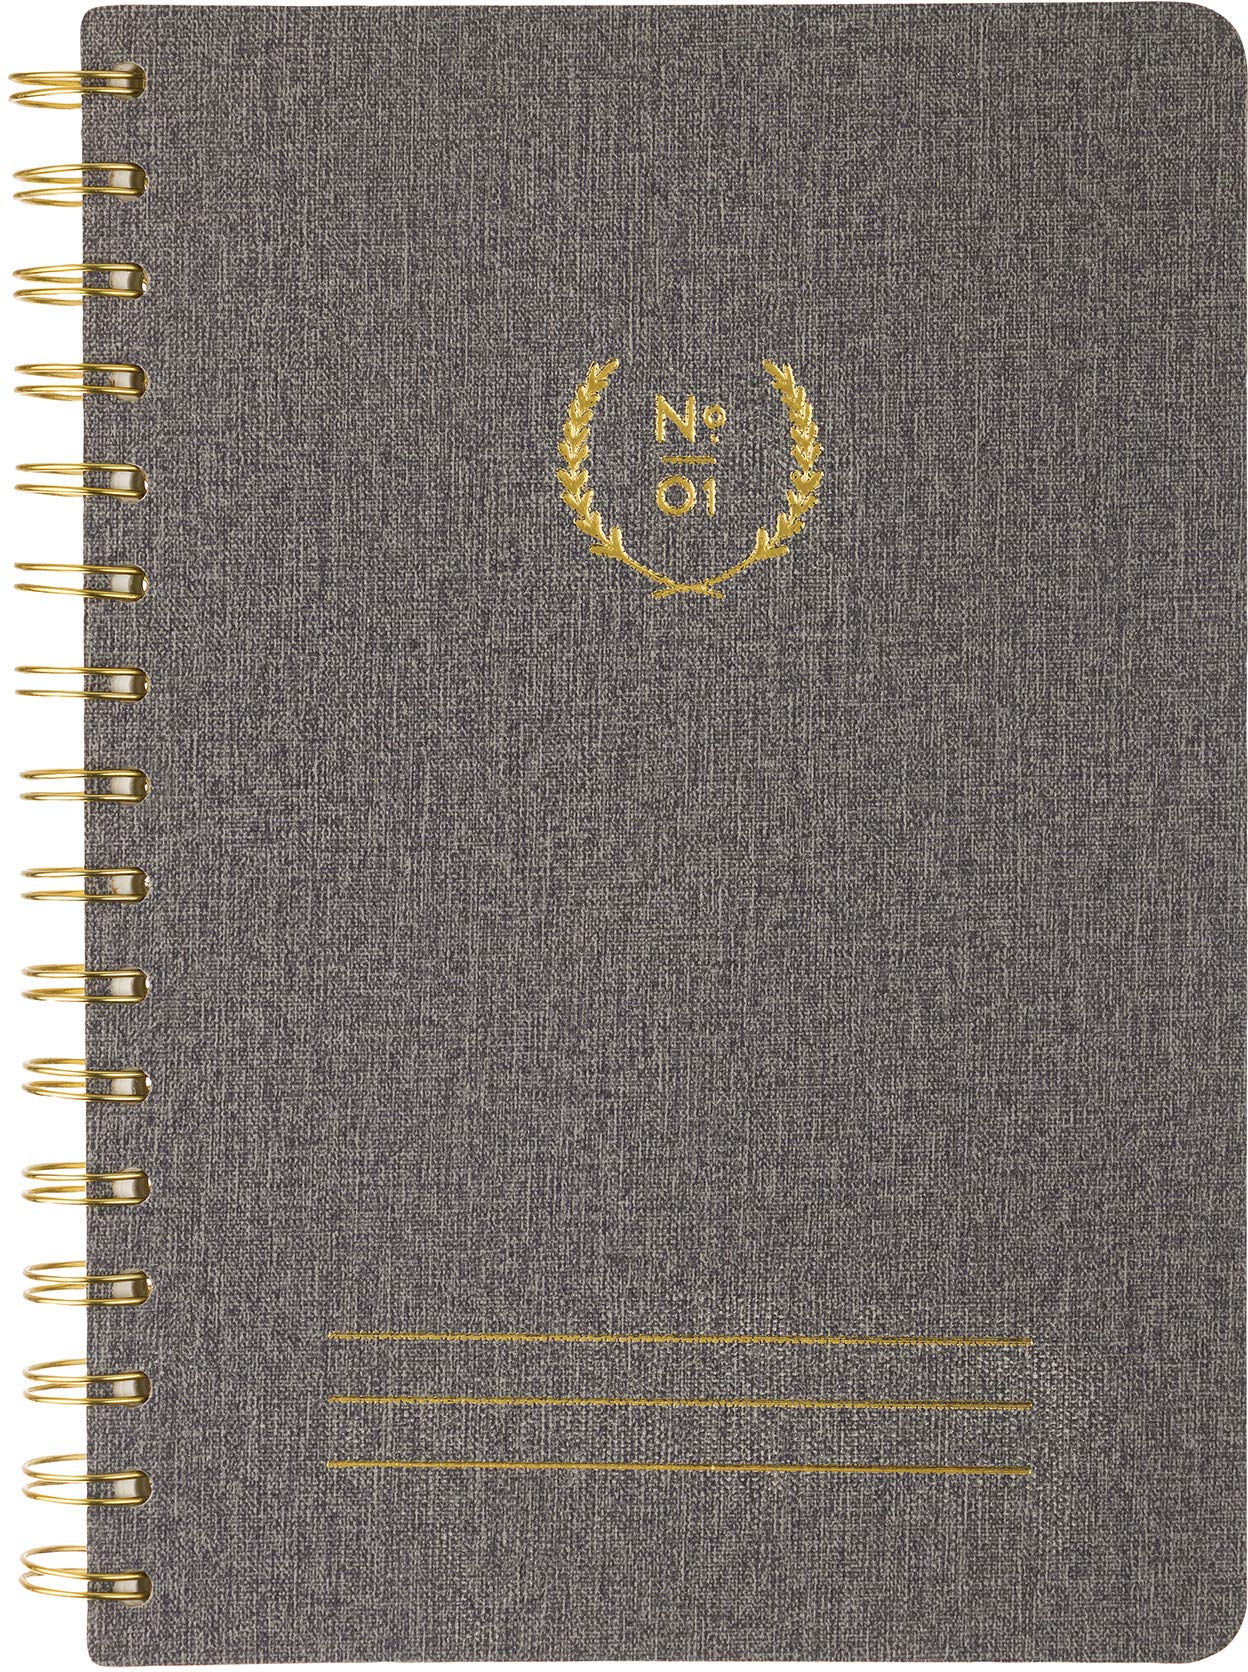 Eccolo 6x8 Wirebound Notebook Oxford Grey